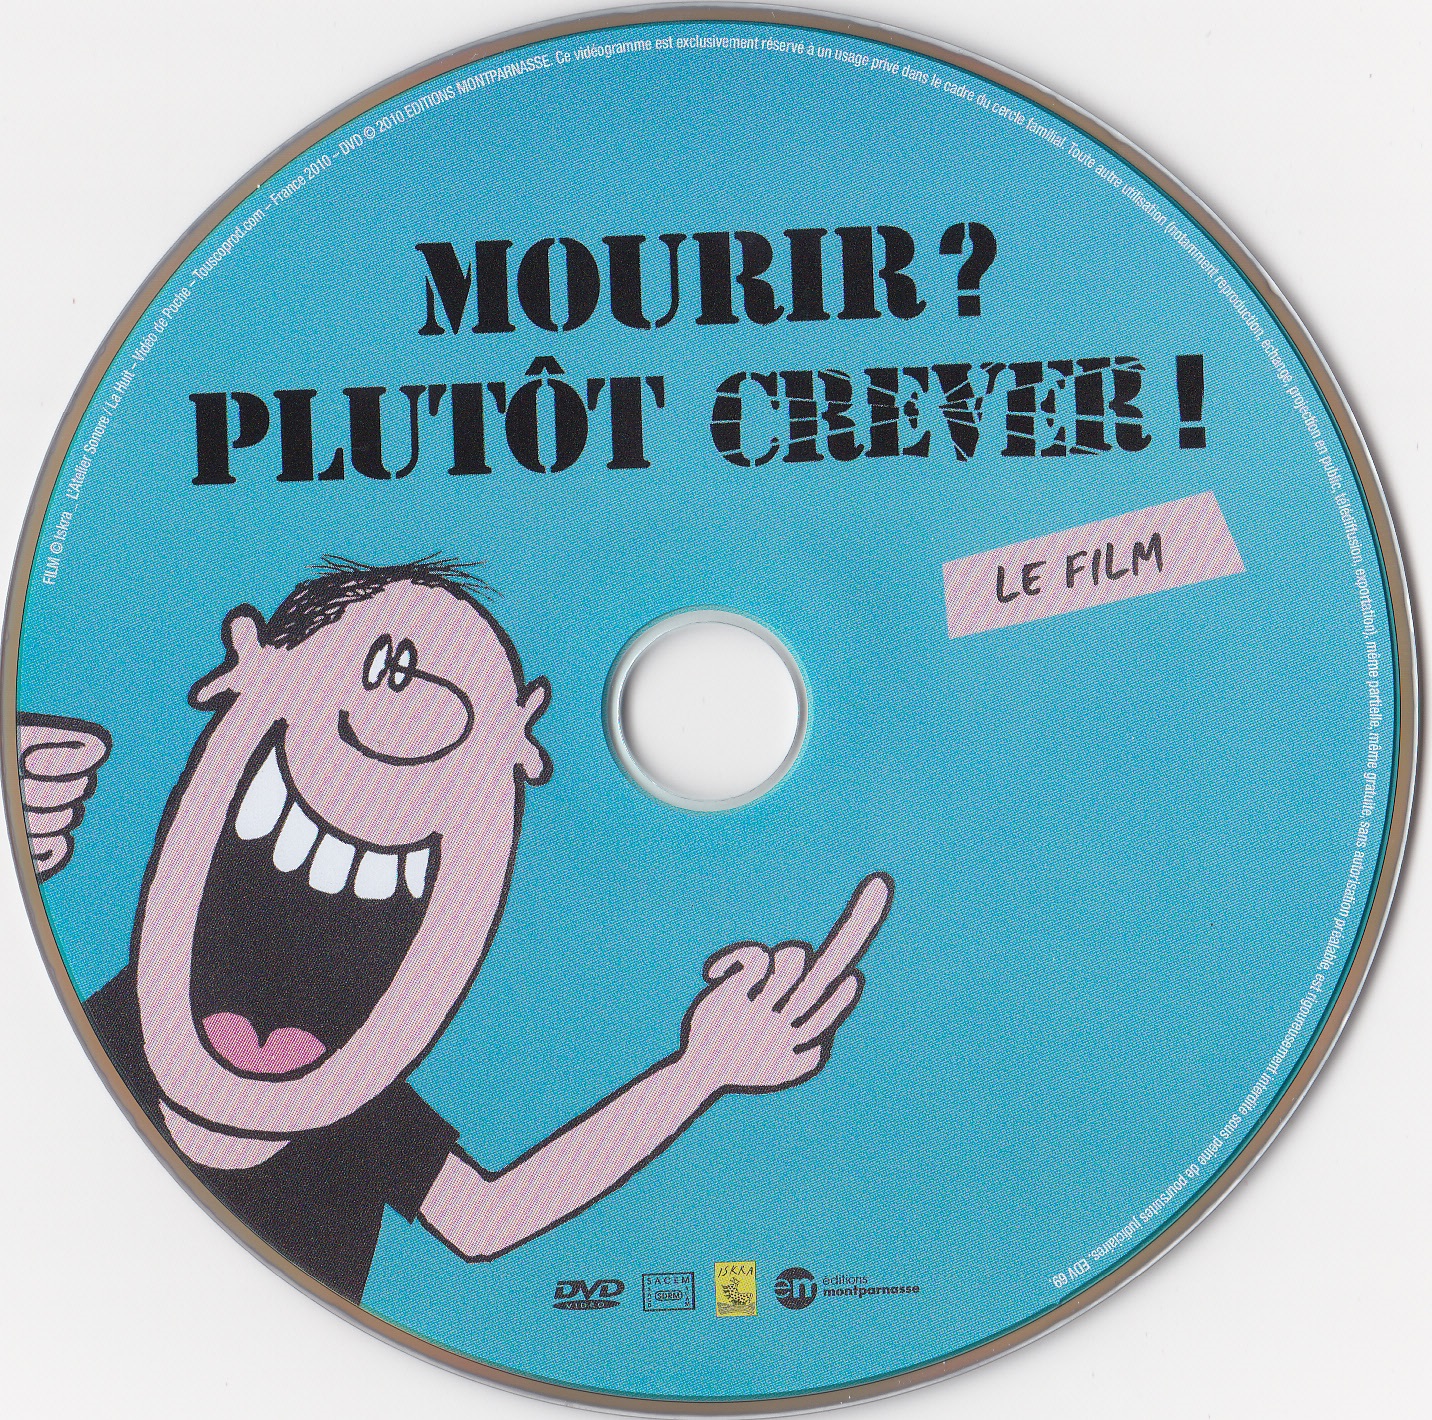 Mourir Plutot Crever !